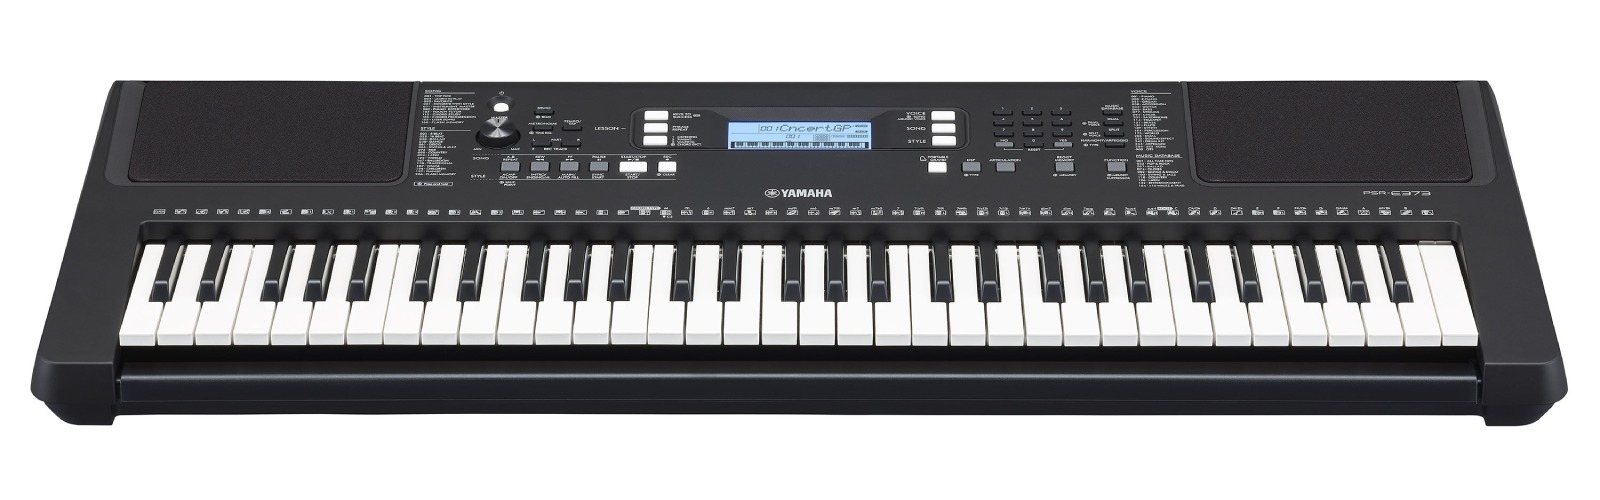 Yamaha Psr E373 - Entertainer Keyboard - Variation 3